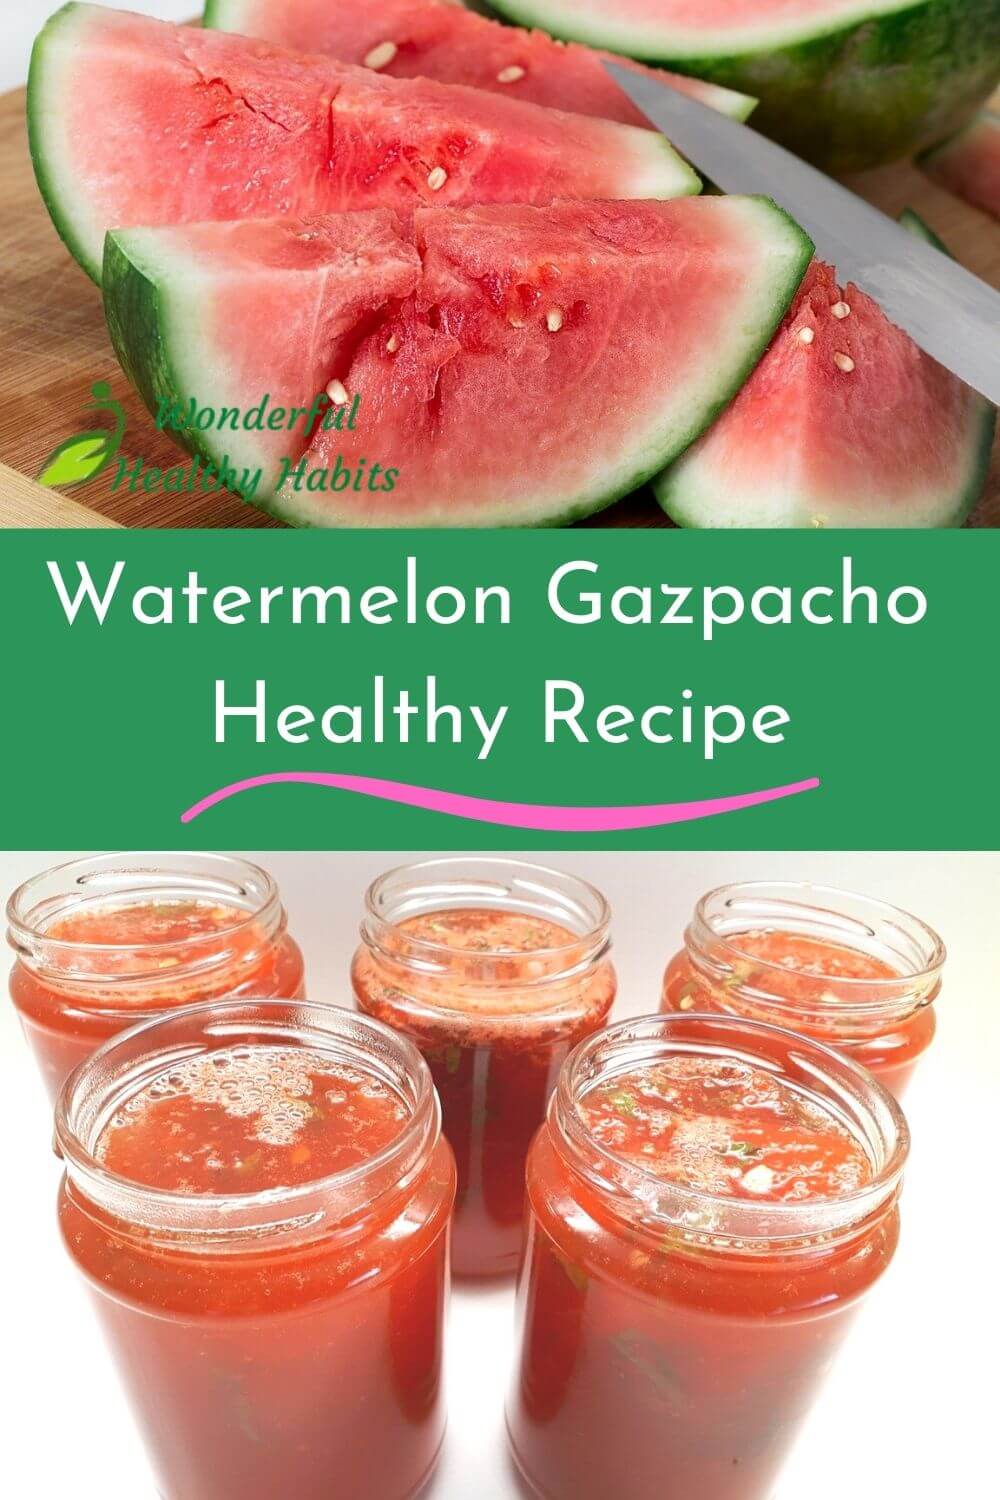 Watermelon Gazpacho Healthy Recipe